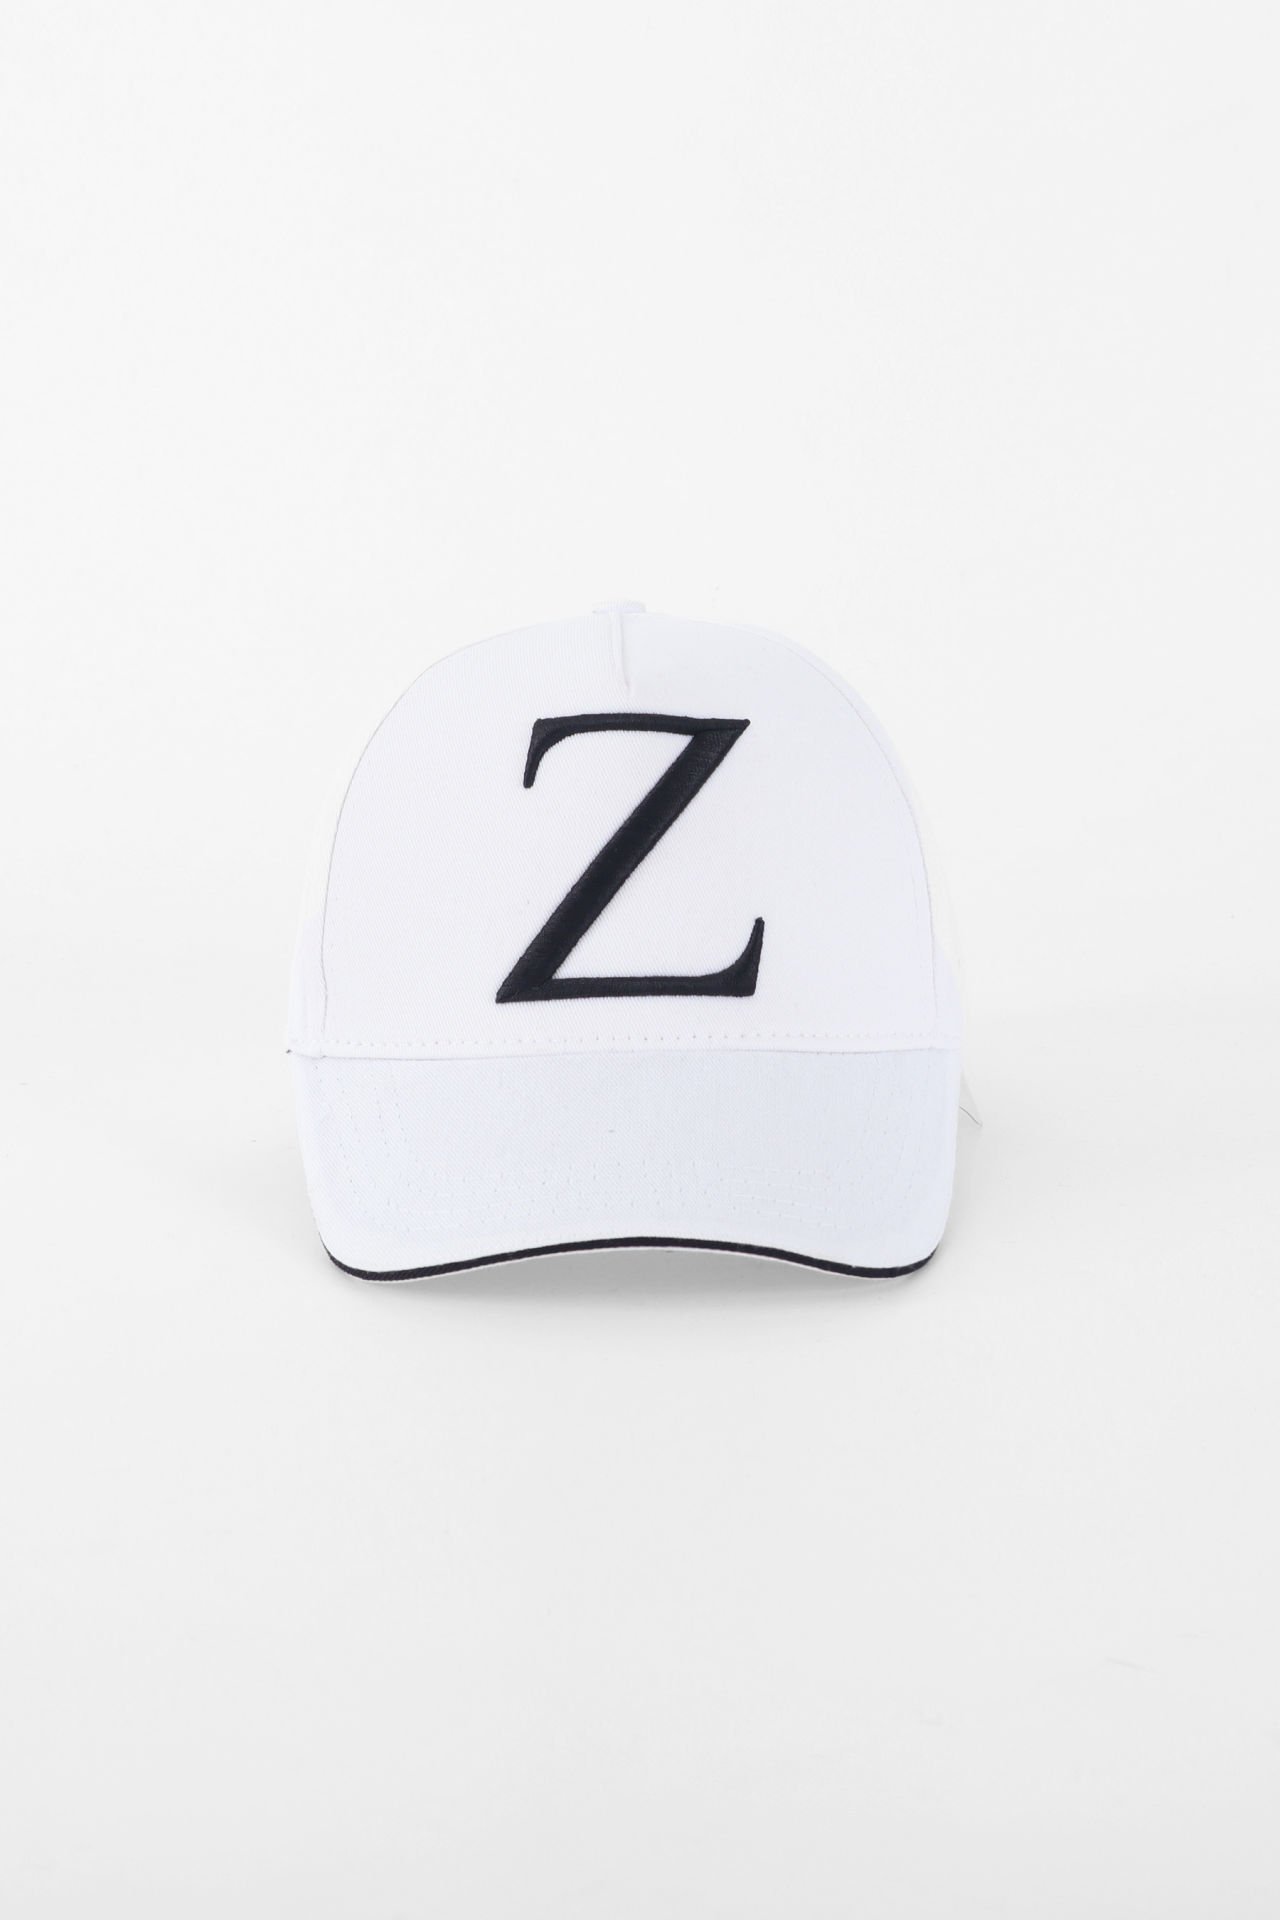 Z Harf Nakışlı Kep Şapka - Beyaz